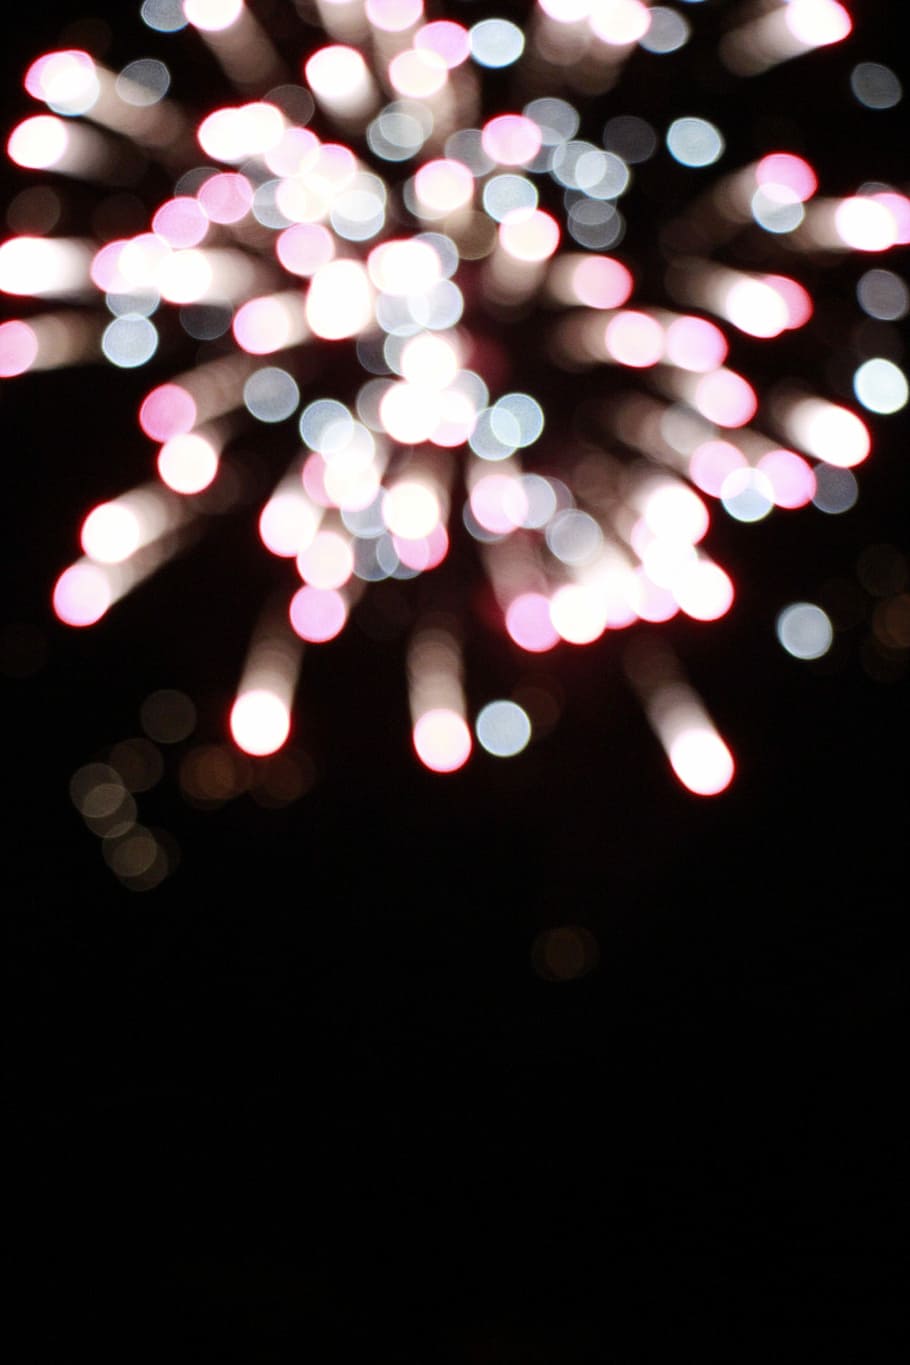 Fireworks, Dark Night, Shiny, the dark night, christmas, defocused, abstract, celebration, backgrounds, glowing